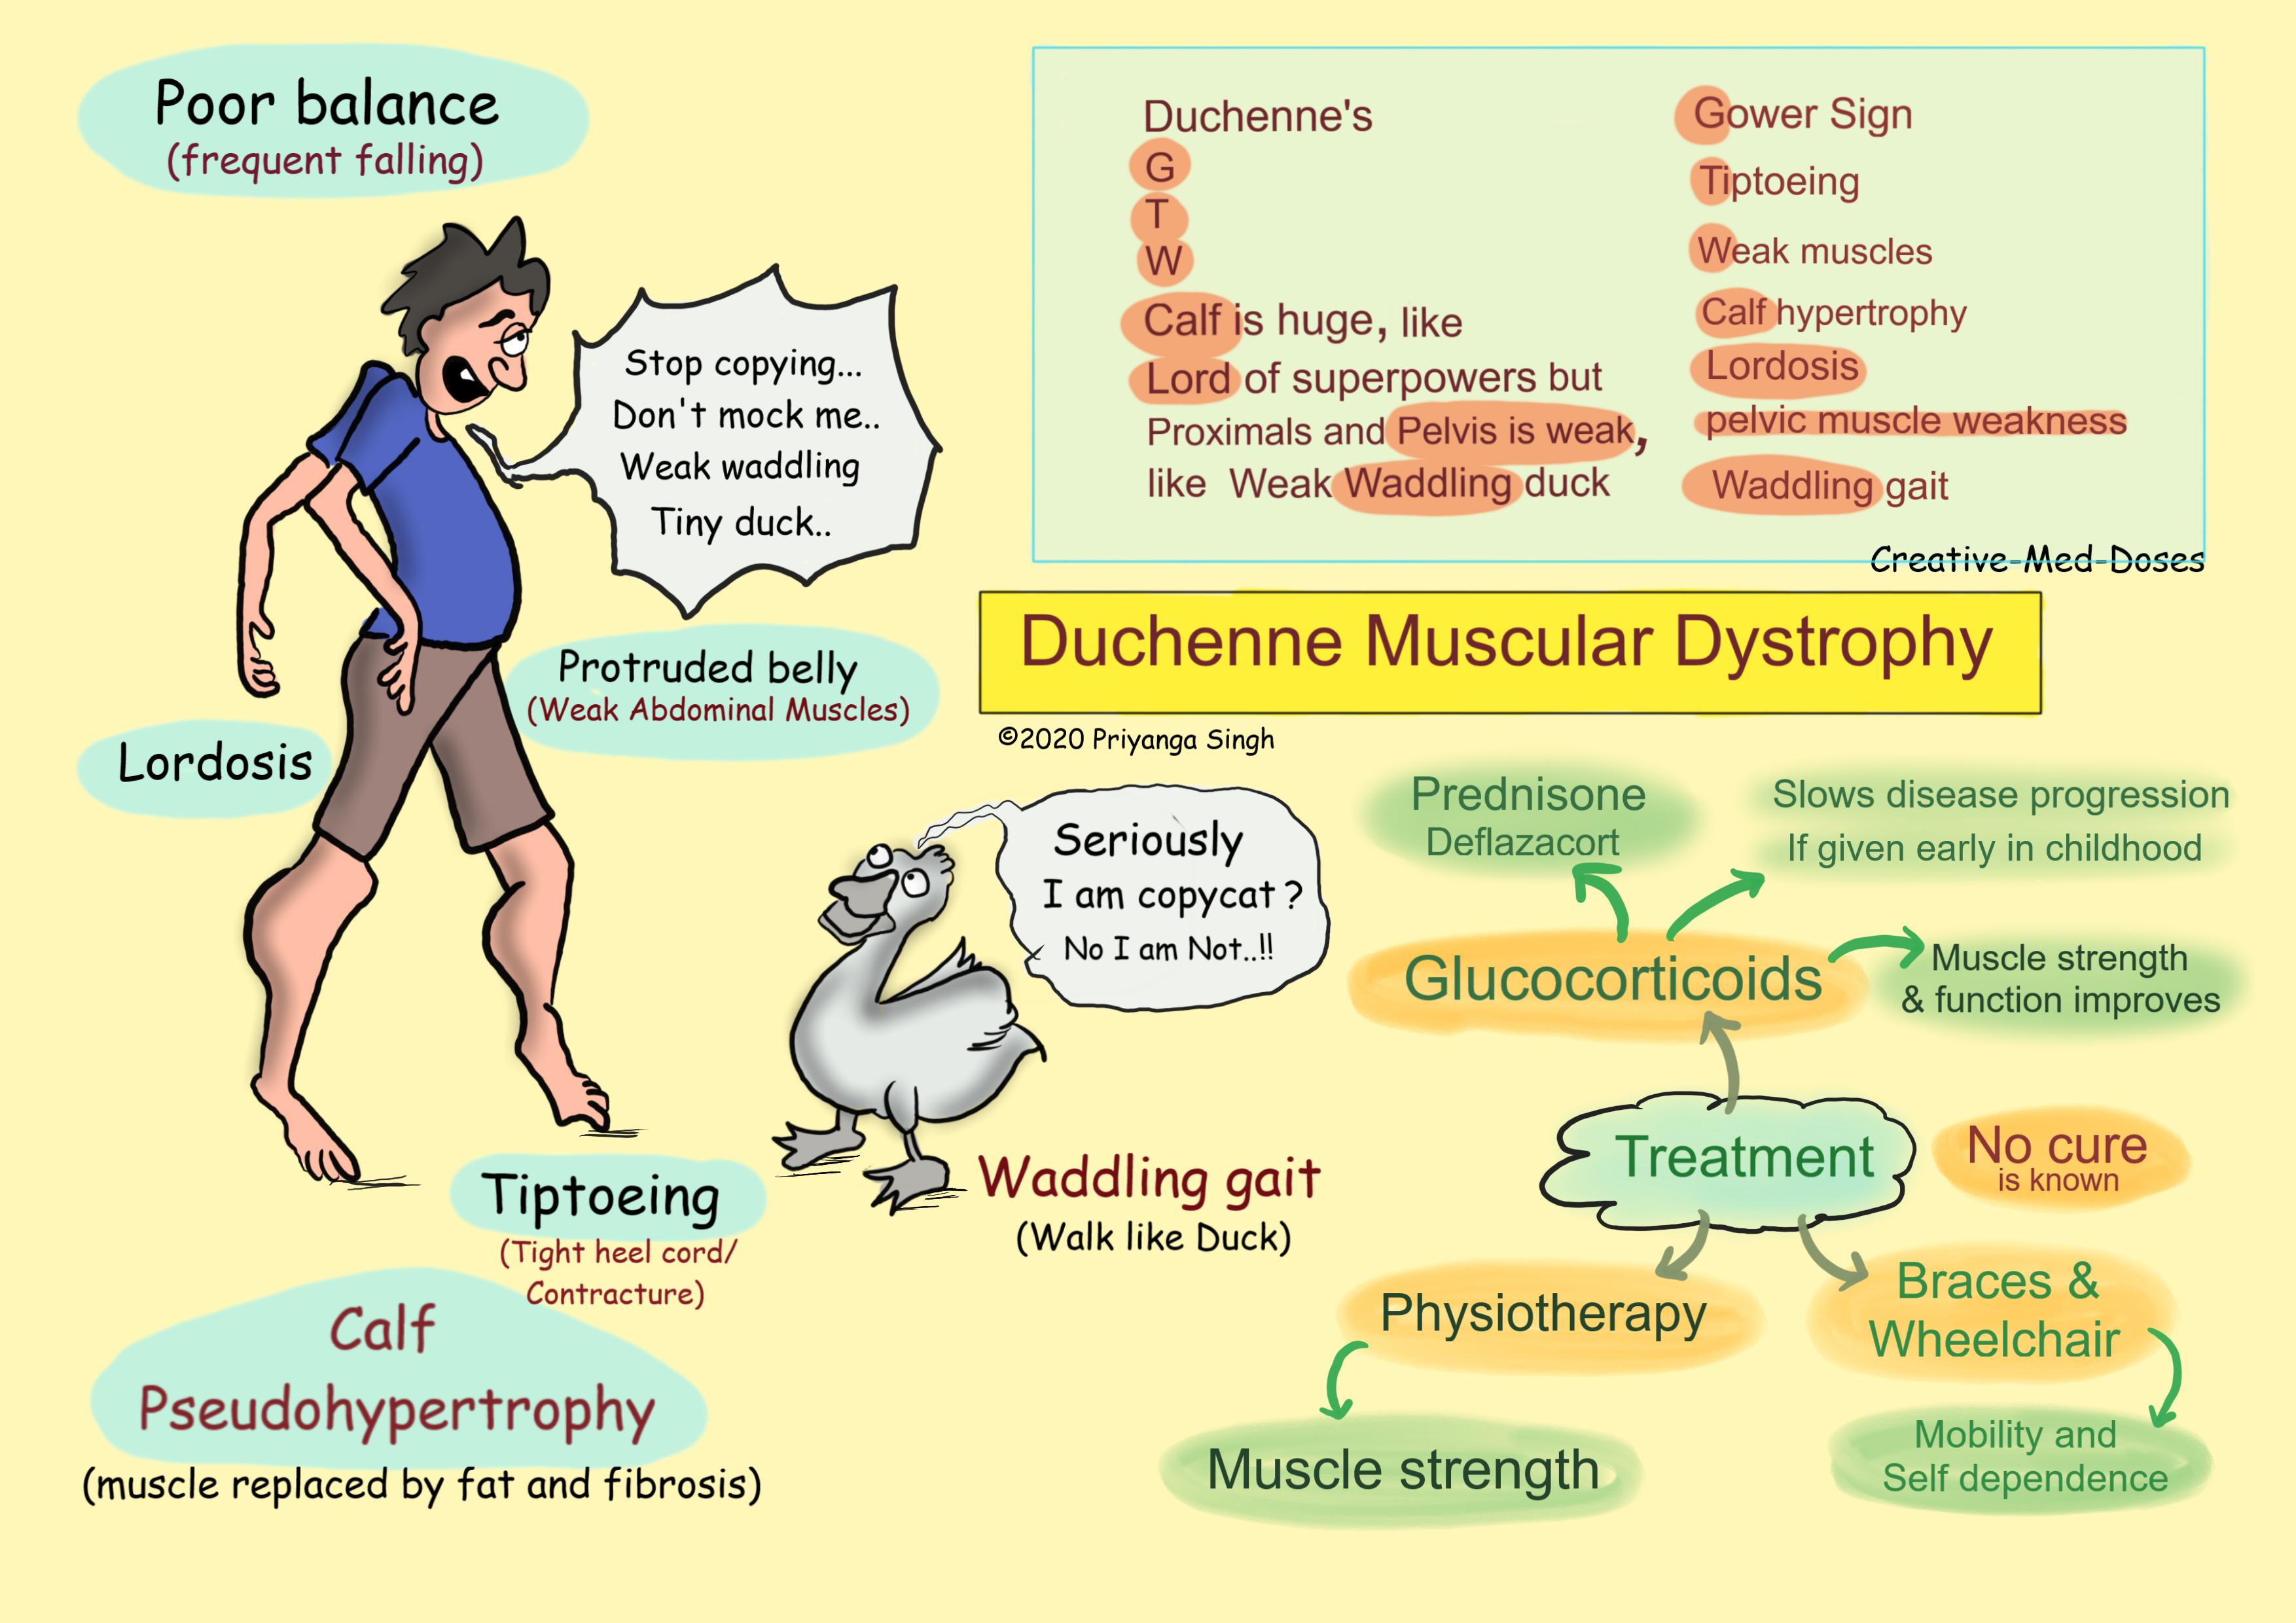 Distrofia Muscular